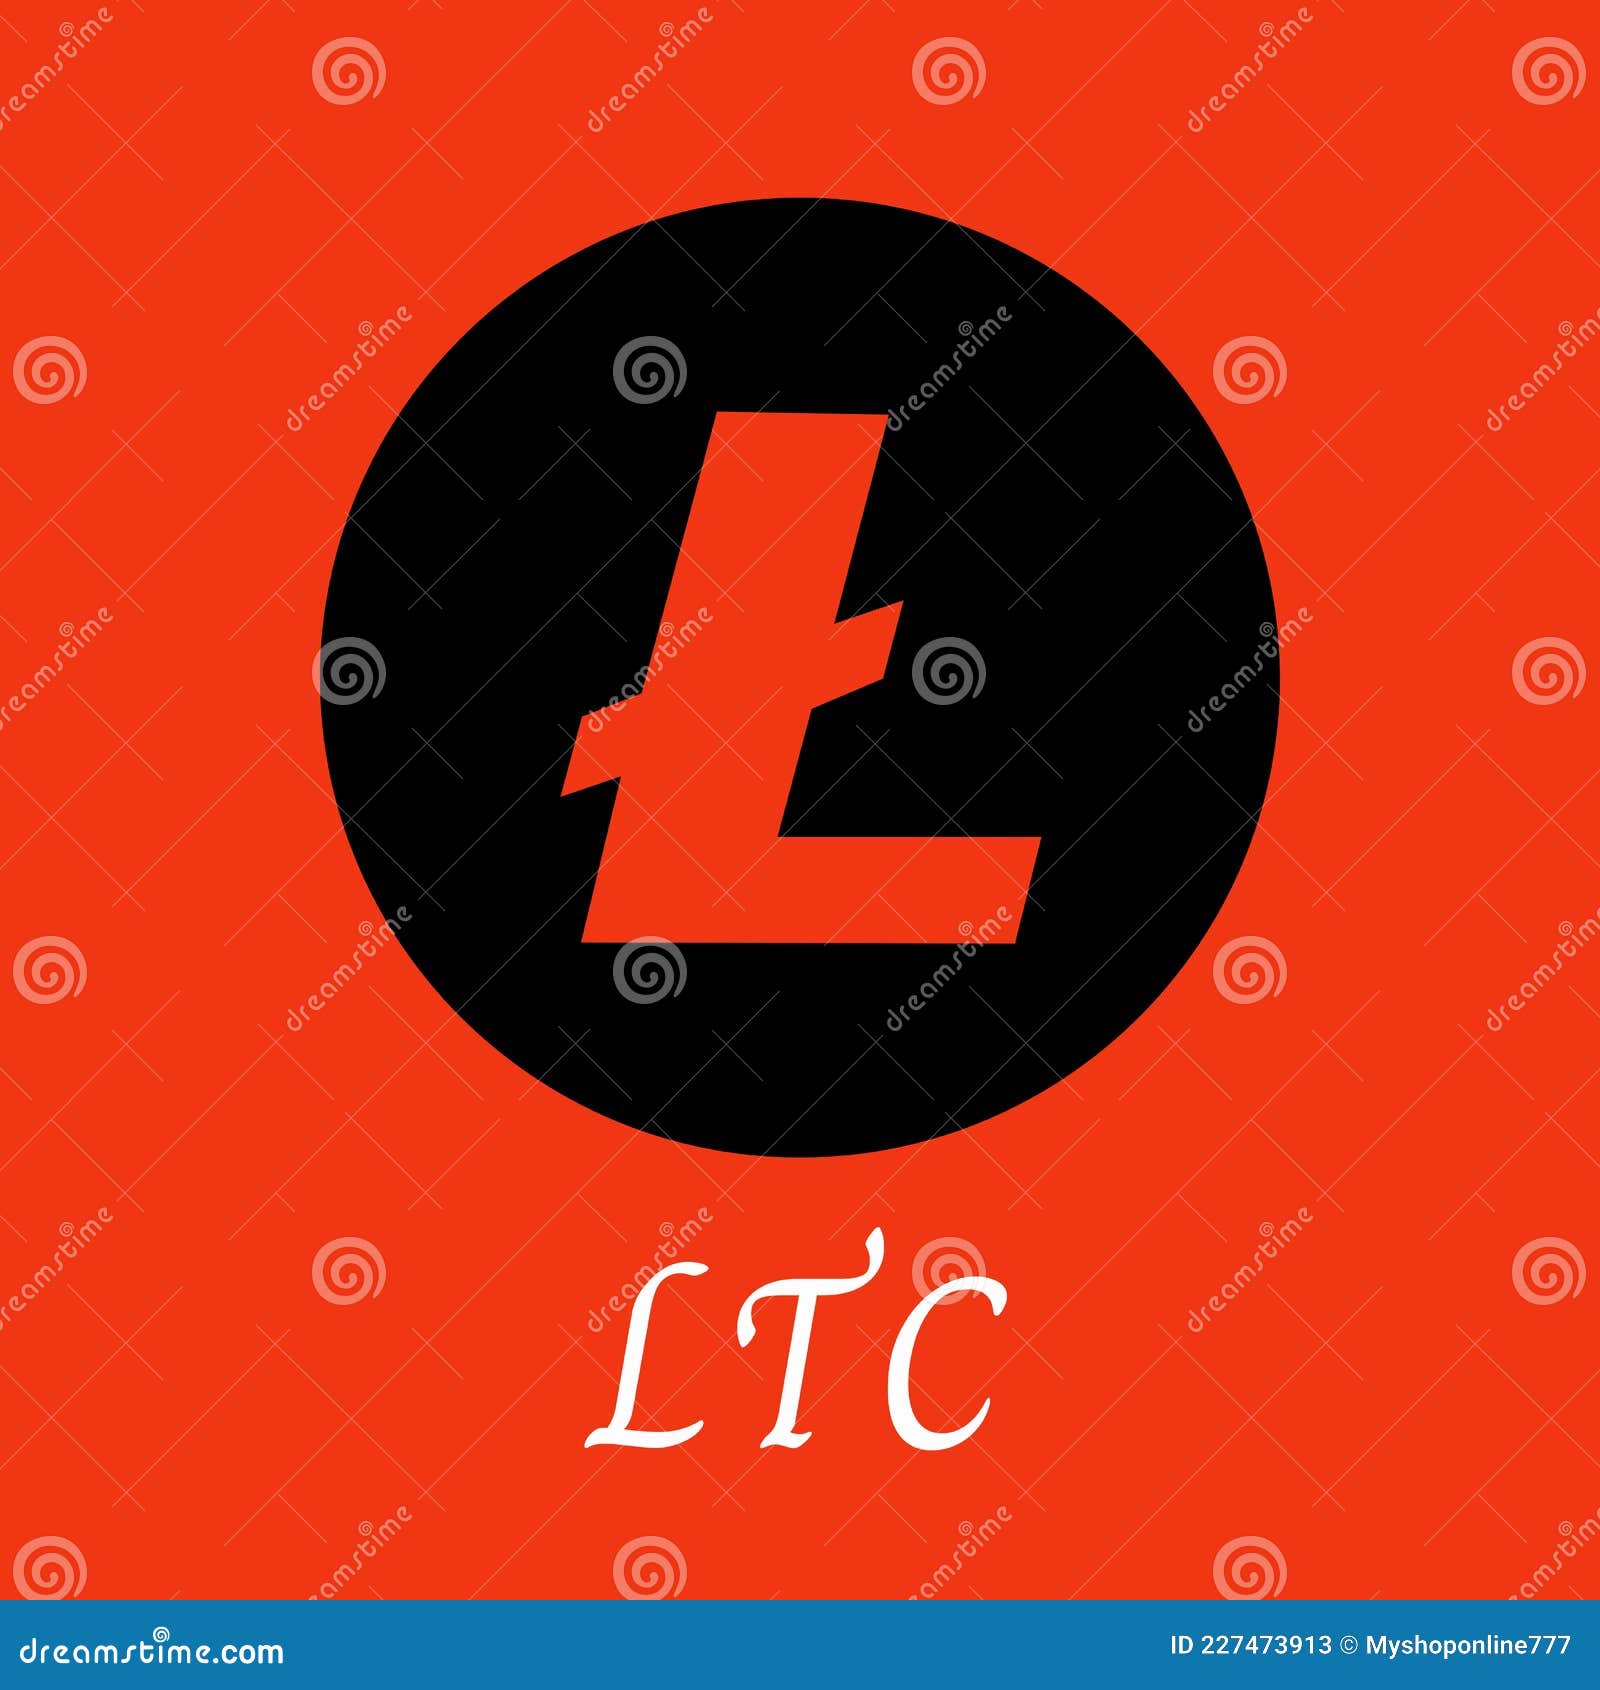 Litecoin red аэропорт пулково обмен биткоин курс доллара